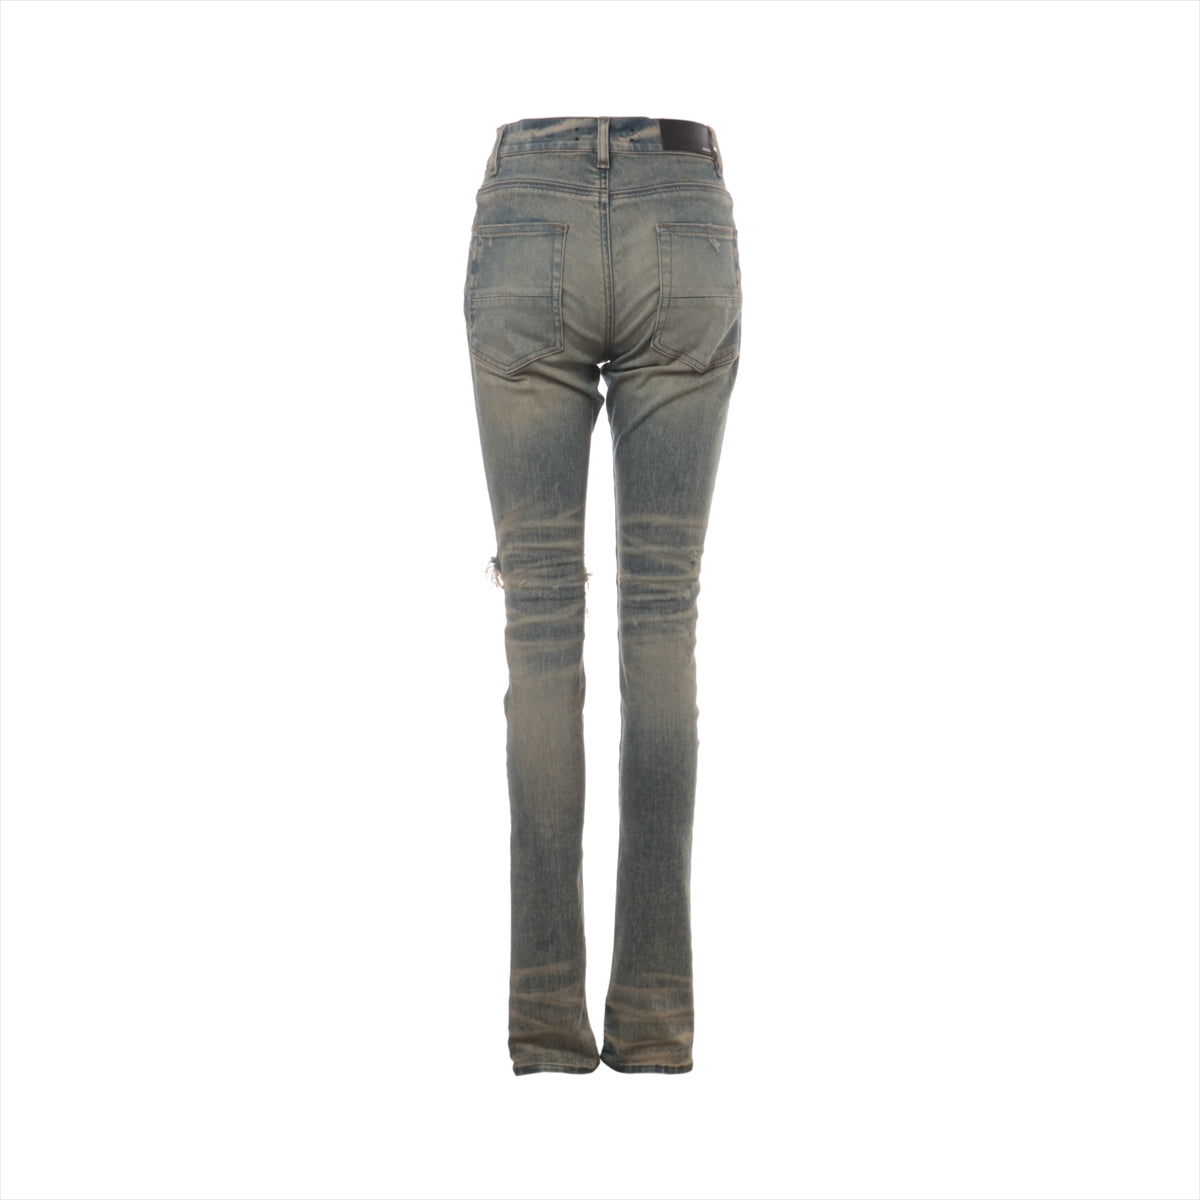 AMIRI Cotton Denim Pants UK29 Men's Blue Indigo  150712 Crash processing